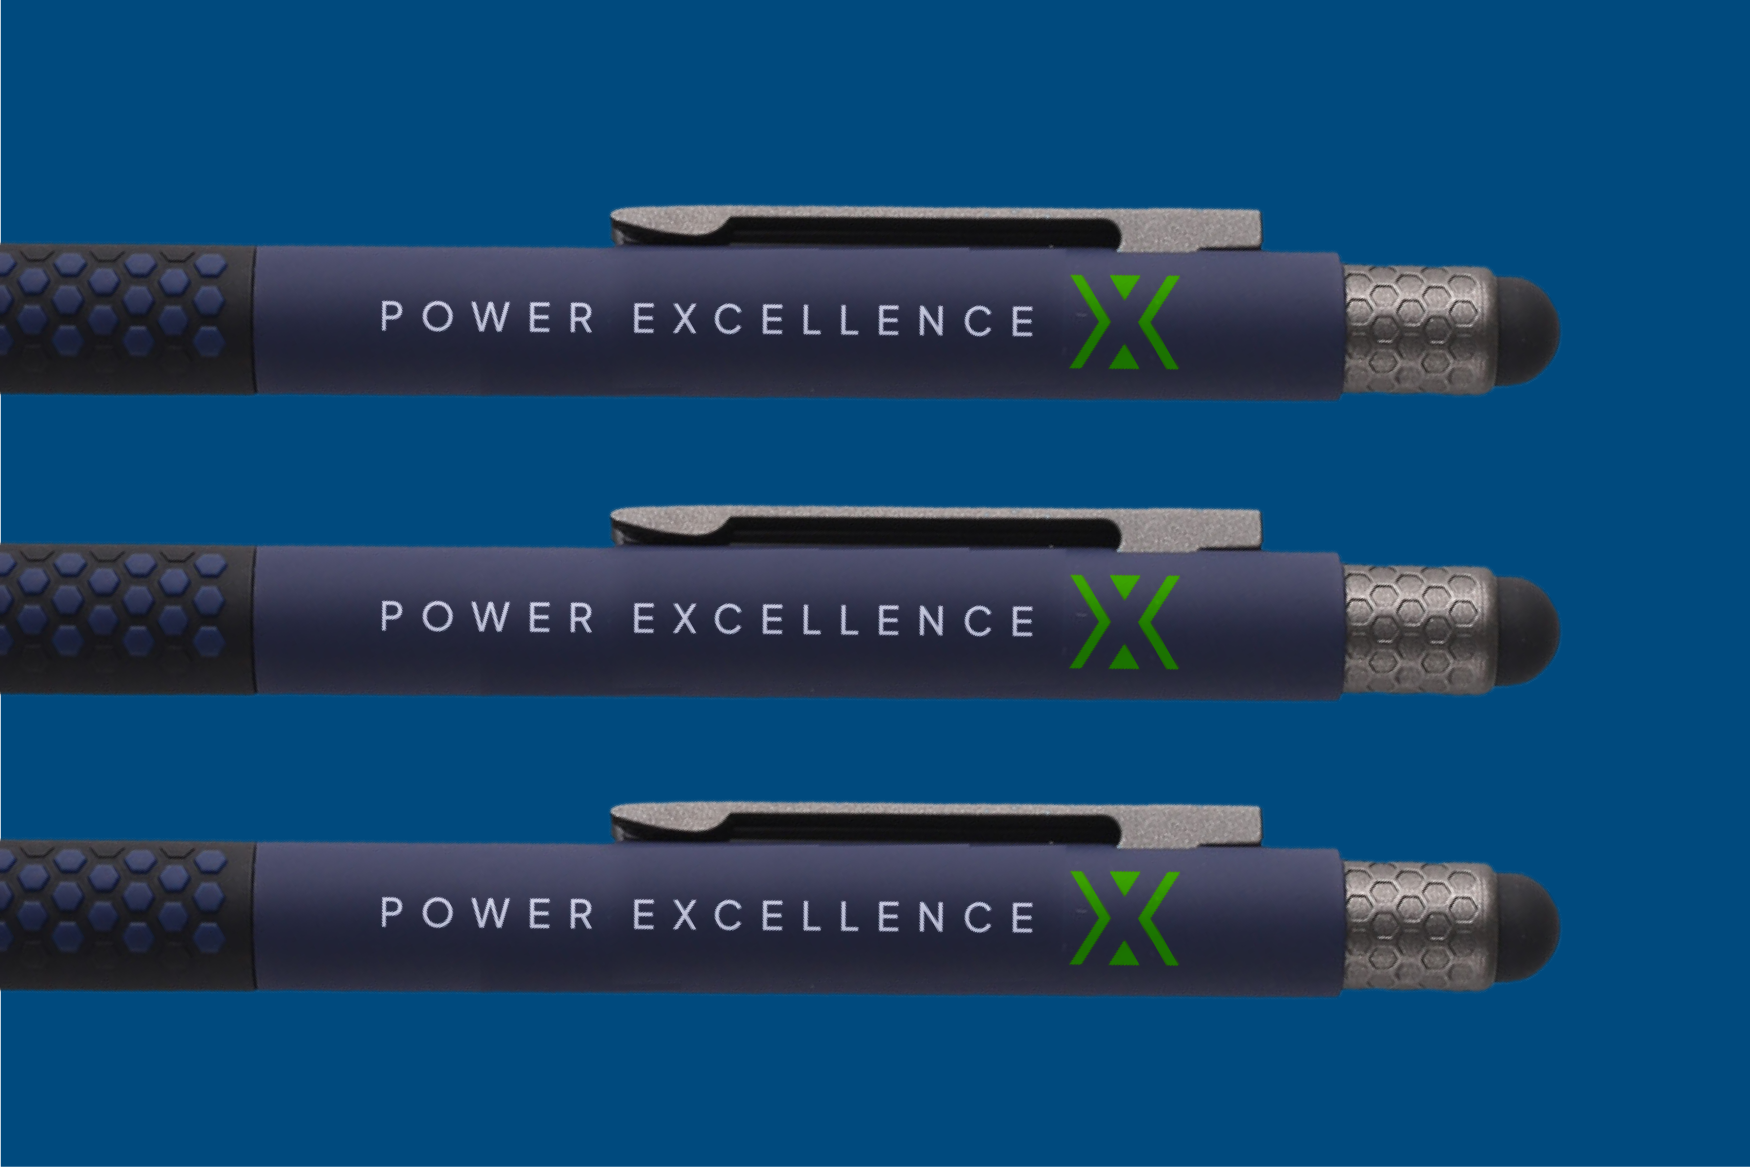 CMX1 "power excellence" pens